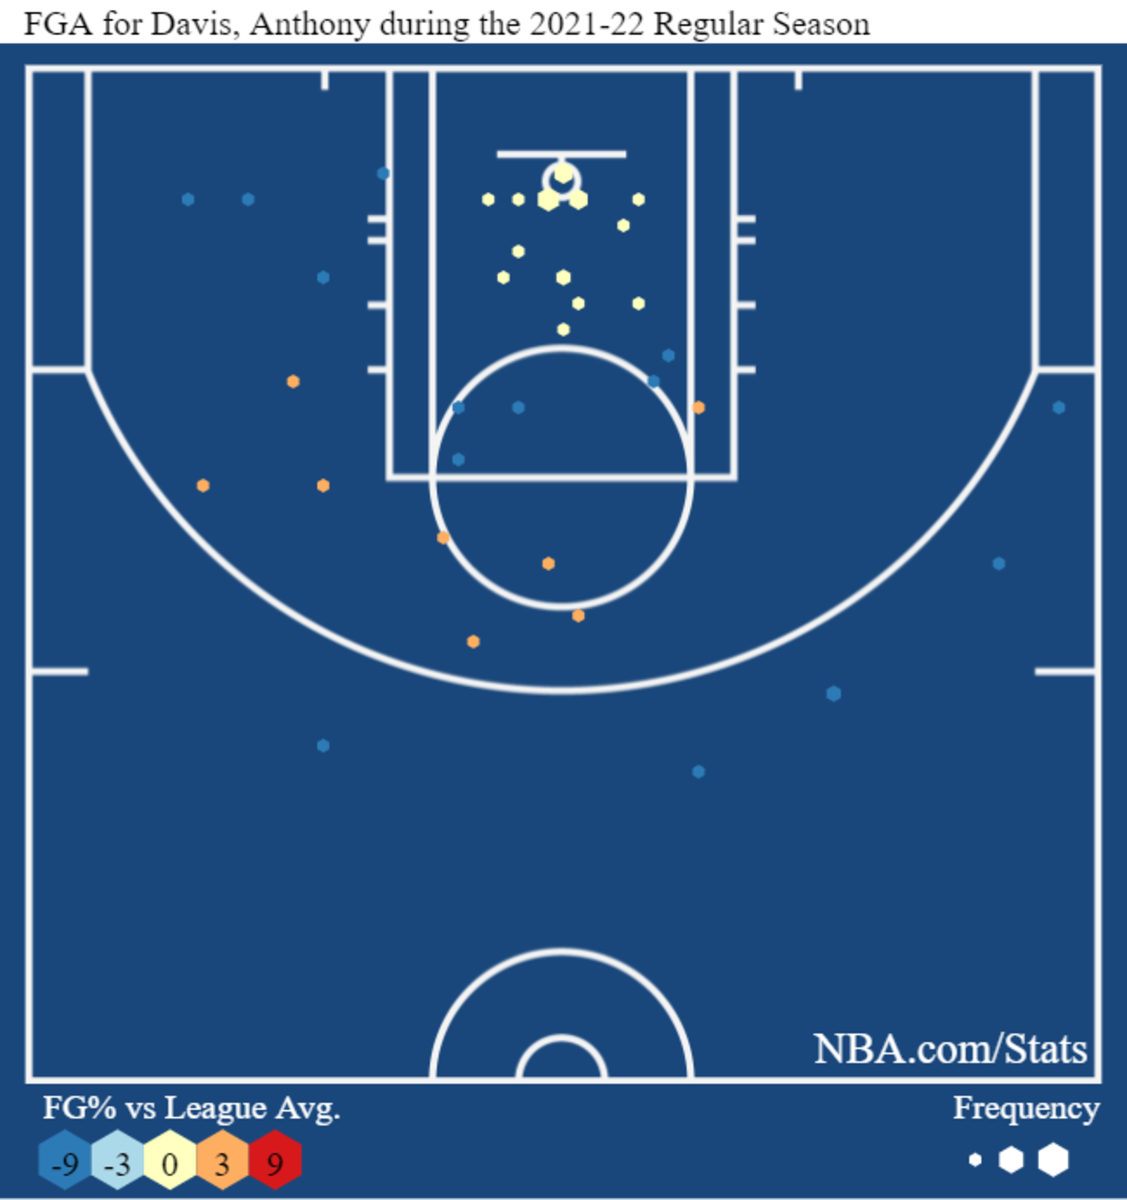 Anthony Davis' shot chart, NBA.com